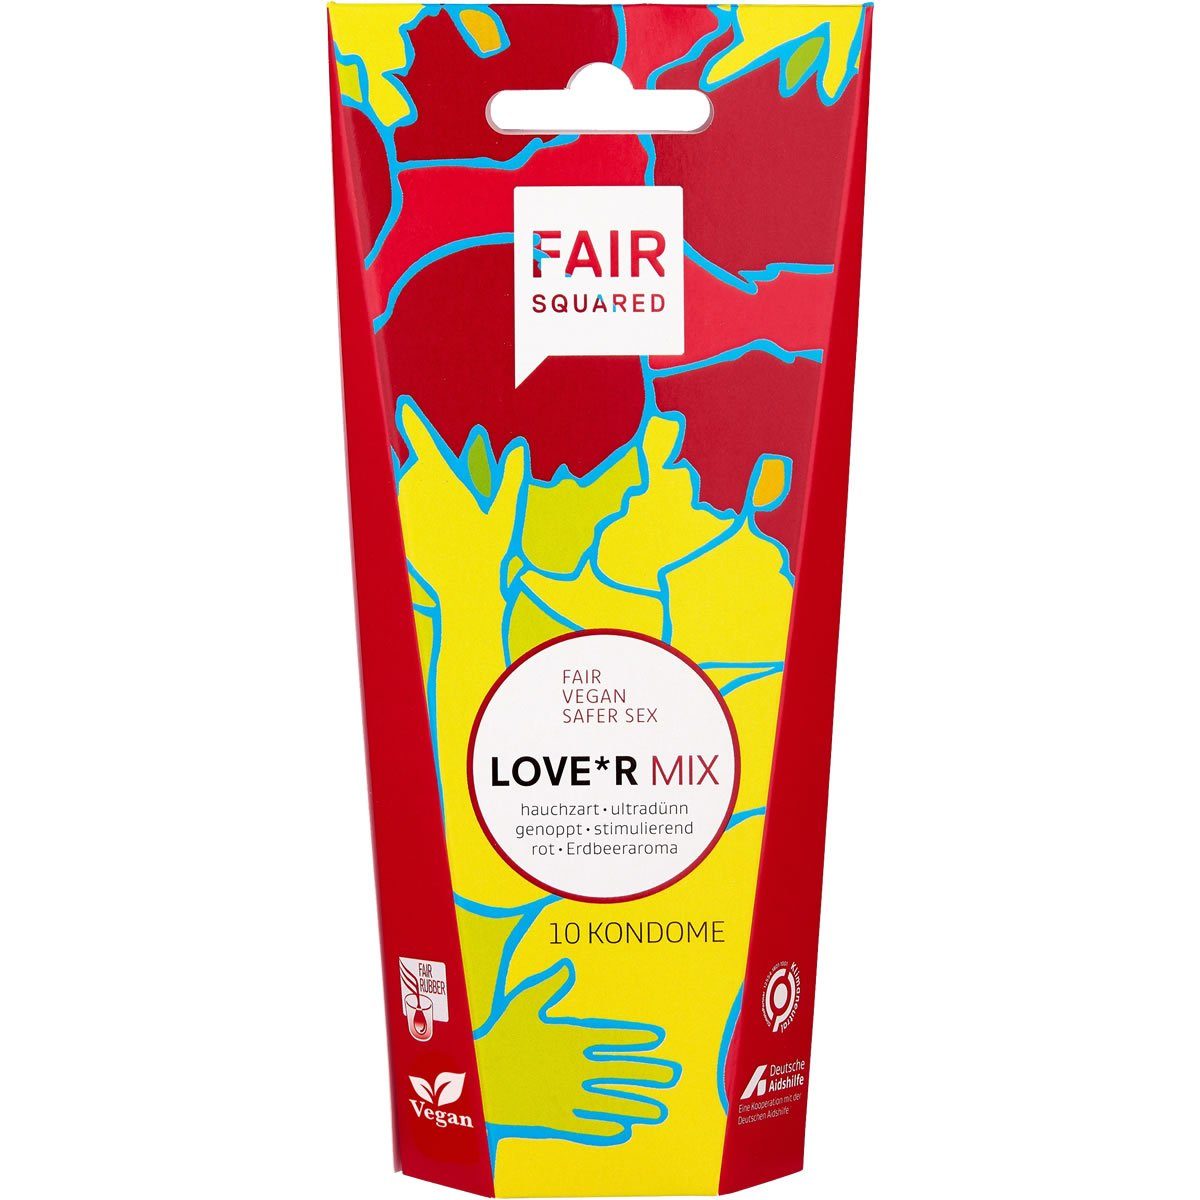 10 your Squared Fair Sortiment Celebrate Mix Packung Fair-Trade-Kondome Kondome mit, im vegane Love St., - Love*r